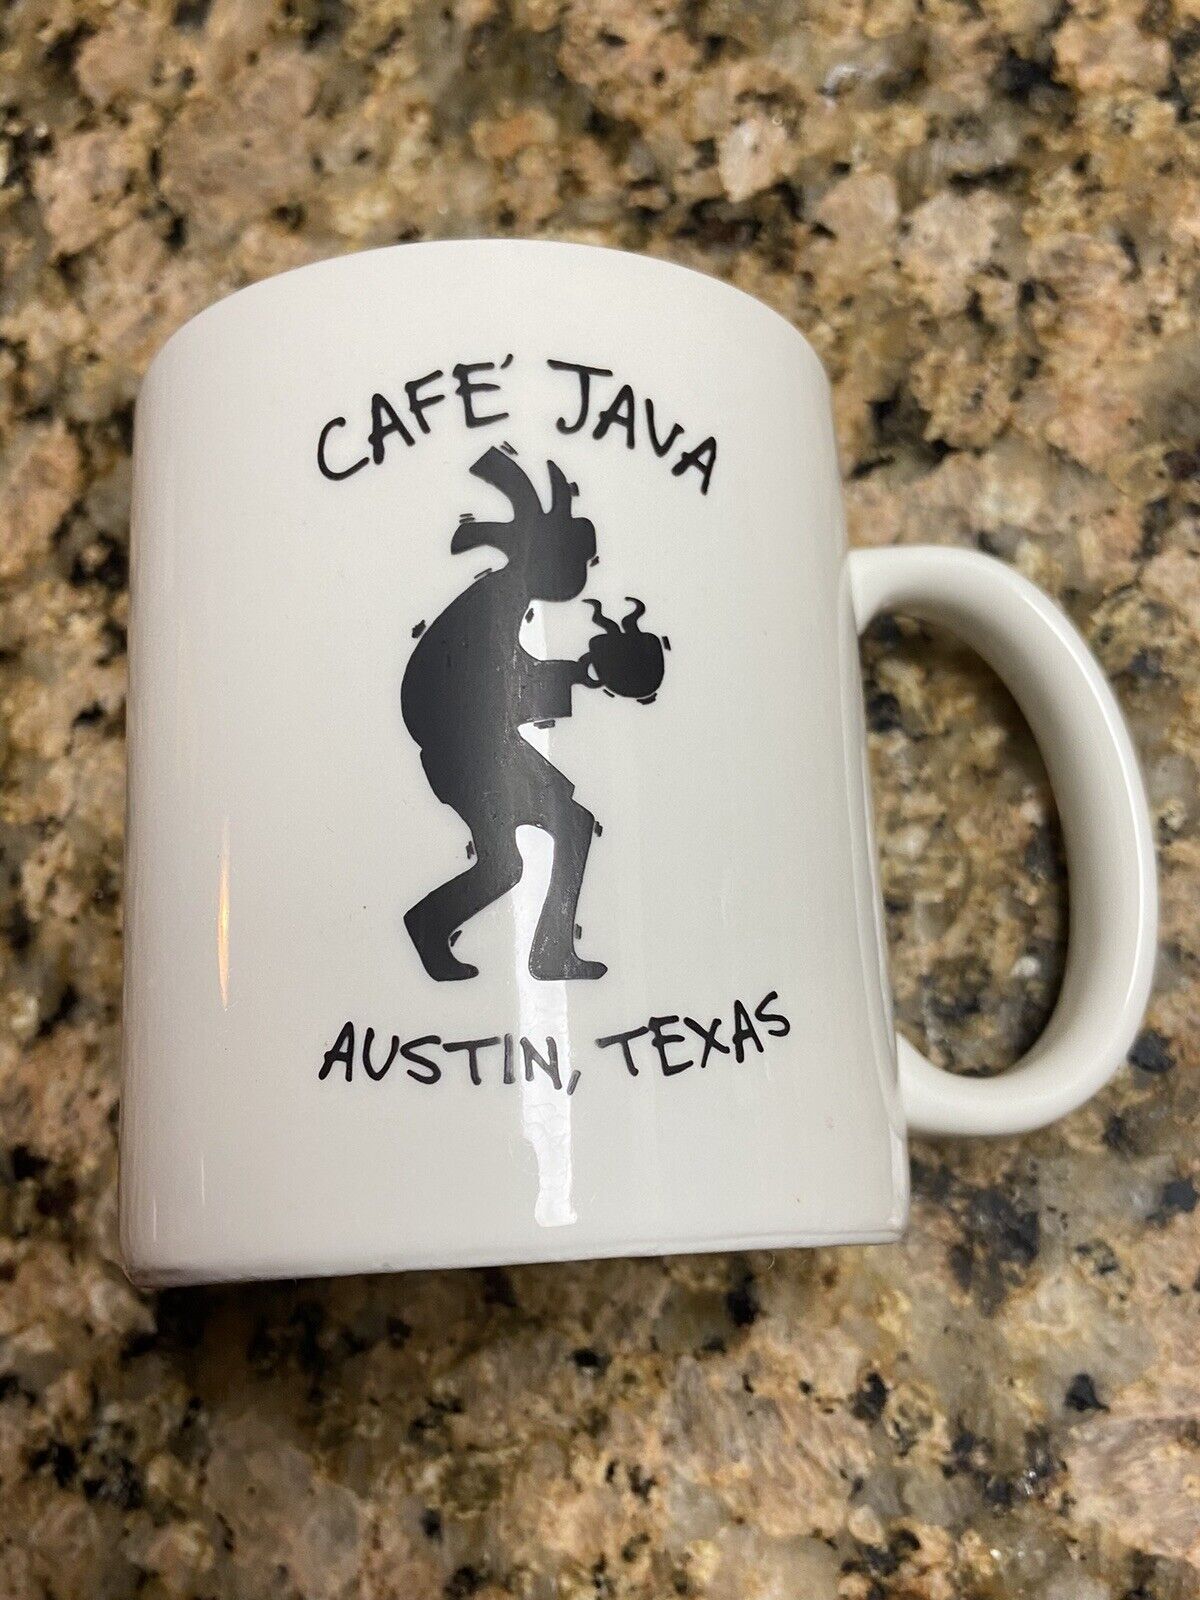 Nice Vintage Cafe Java Austin Texas Coffee Mug Rare MINTY